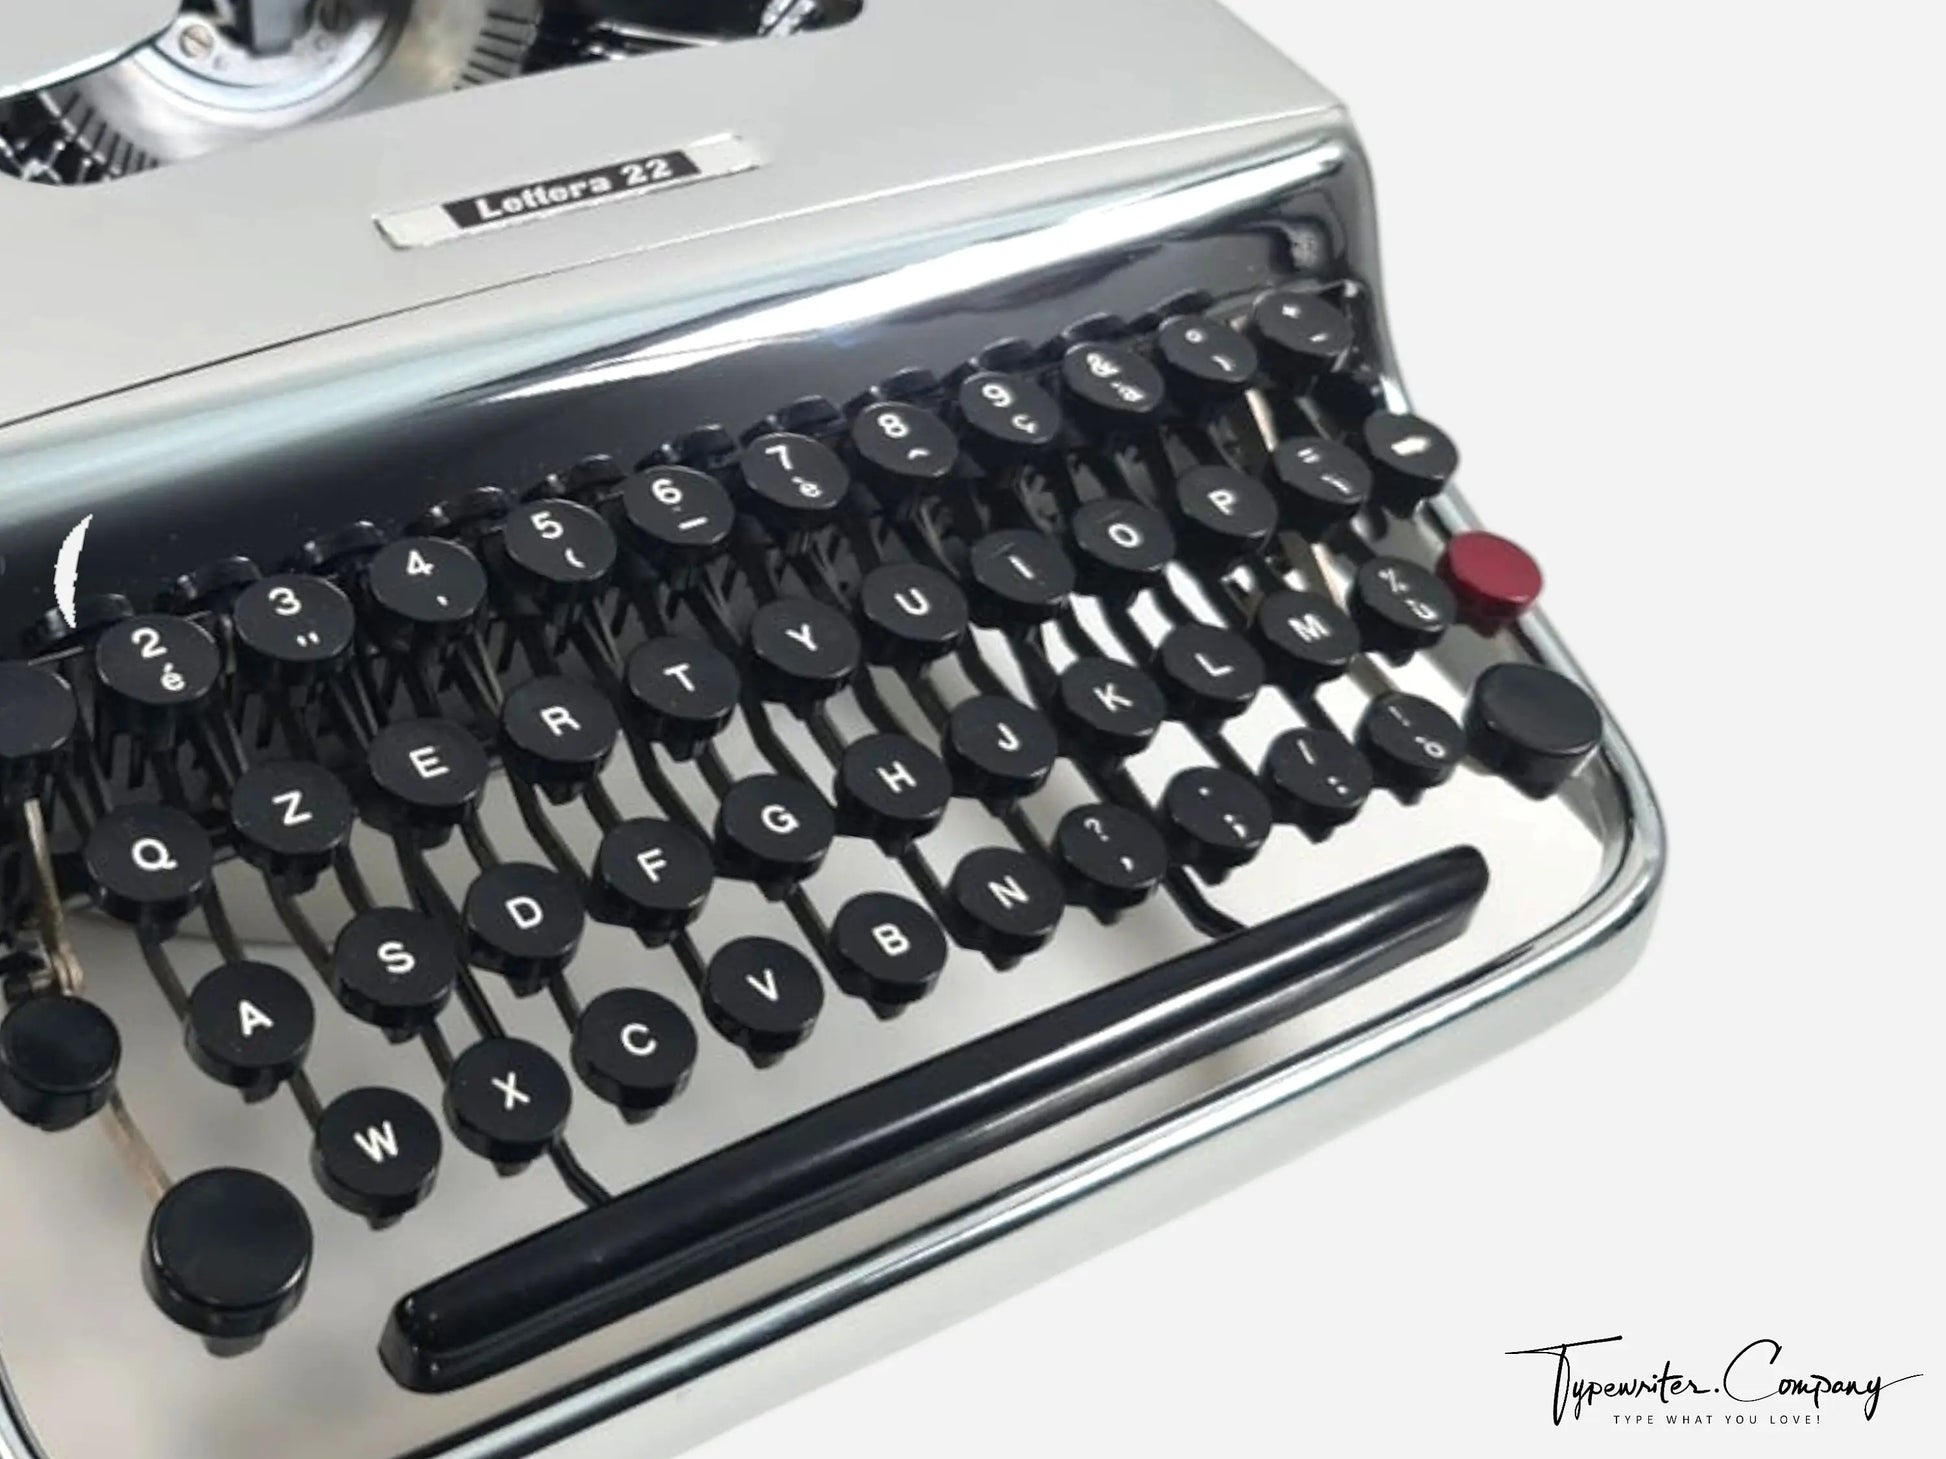 Olivetti Lettera 22 Chrome-Plated Vintage Manual Typewriter, Serviced - ElGranero Typewriter.Company